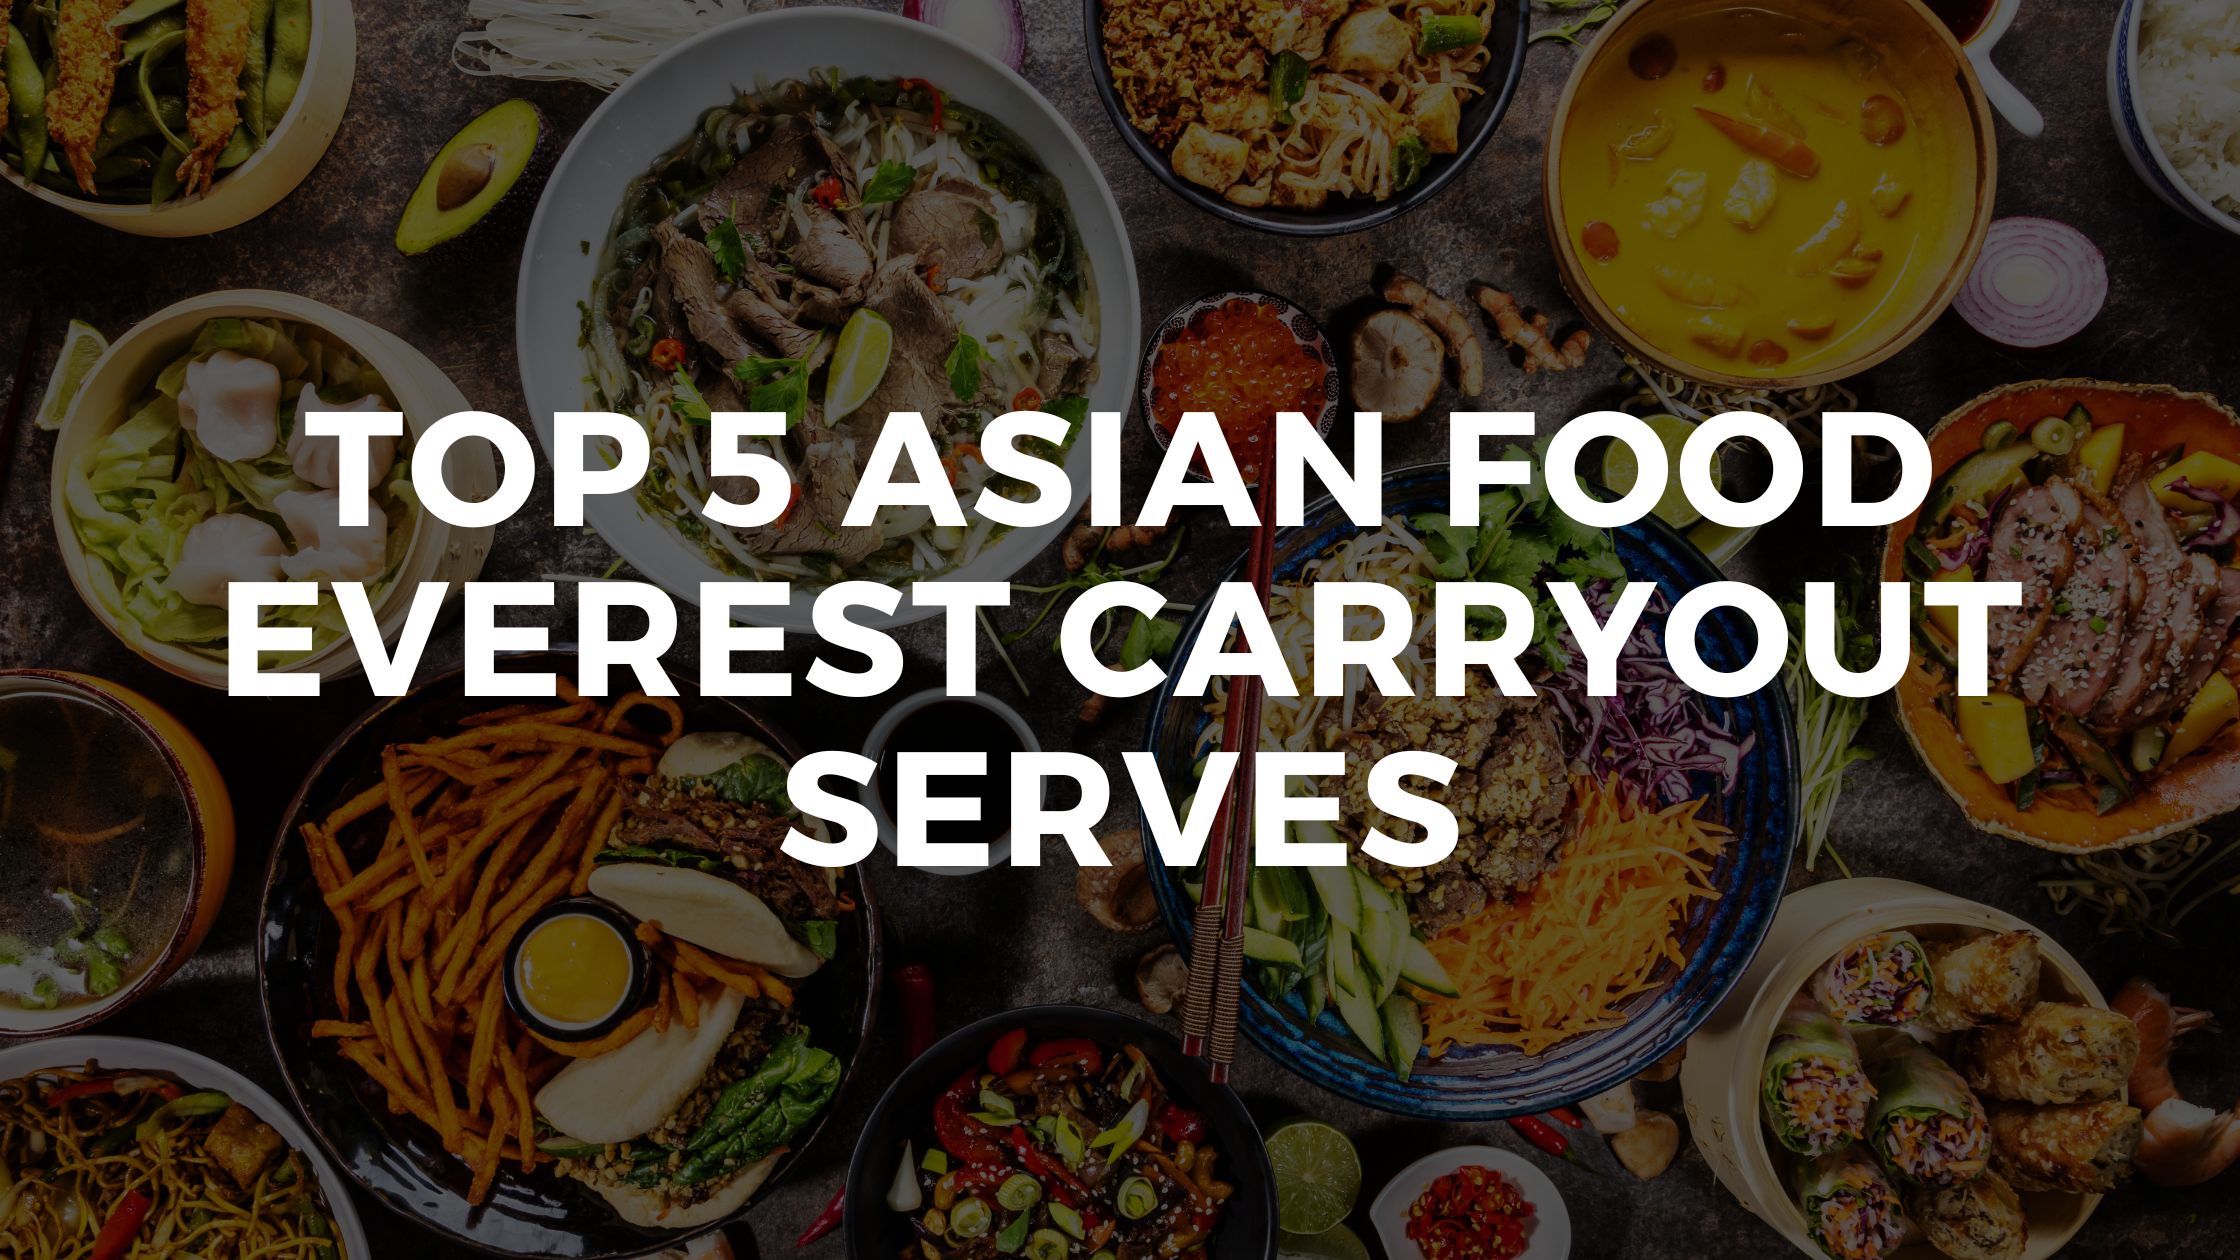 Top 5 Asian Food Everest Carryout Serves